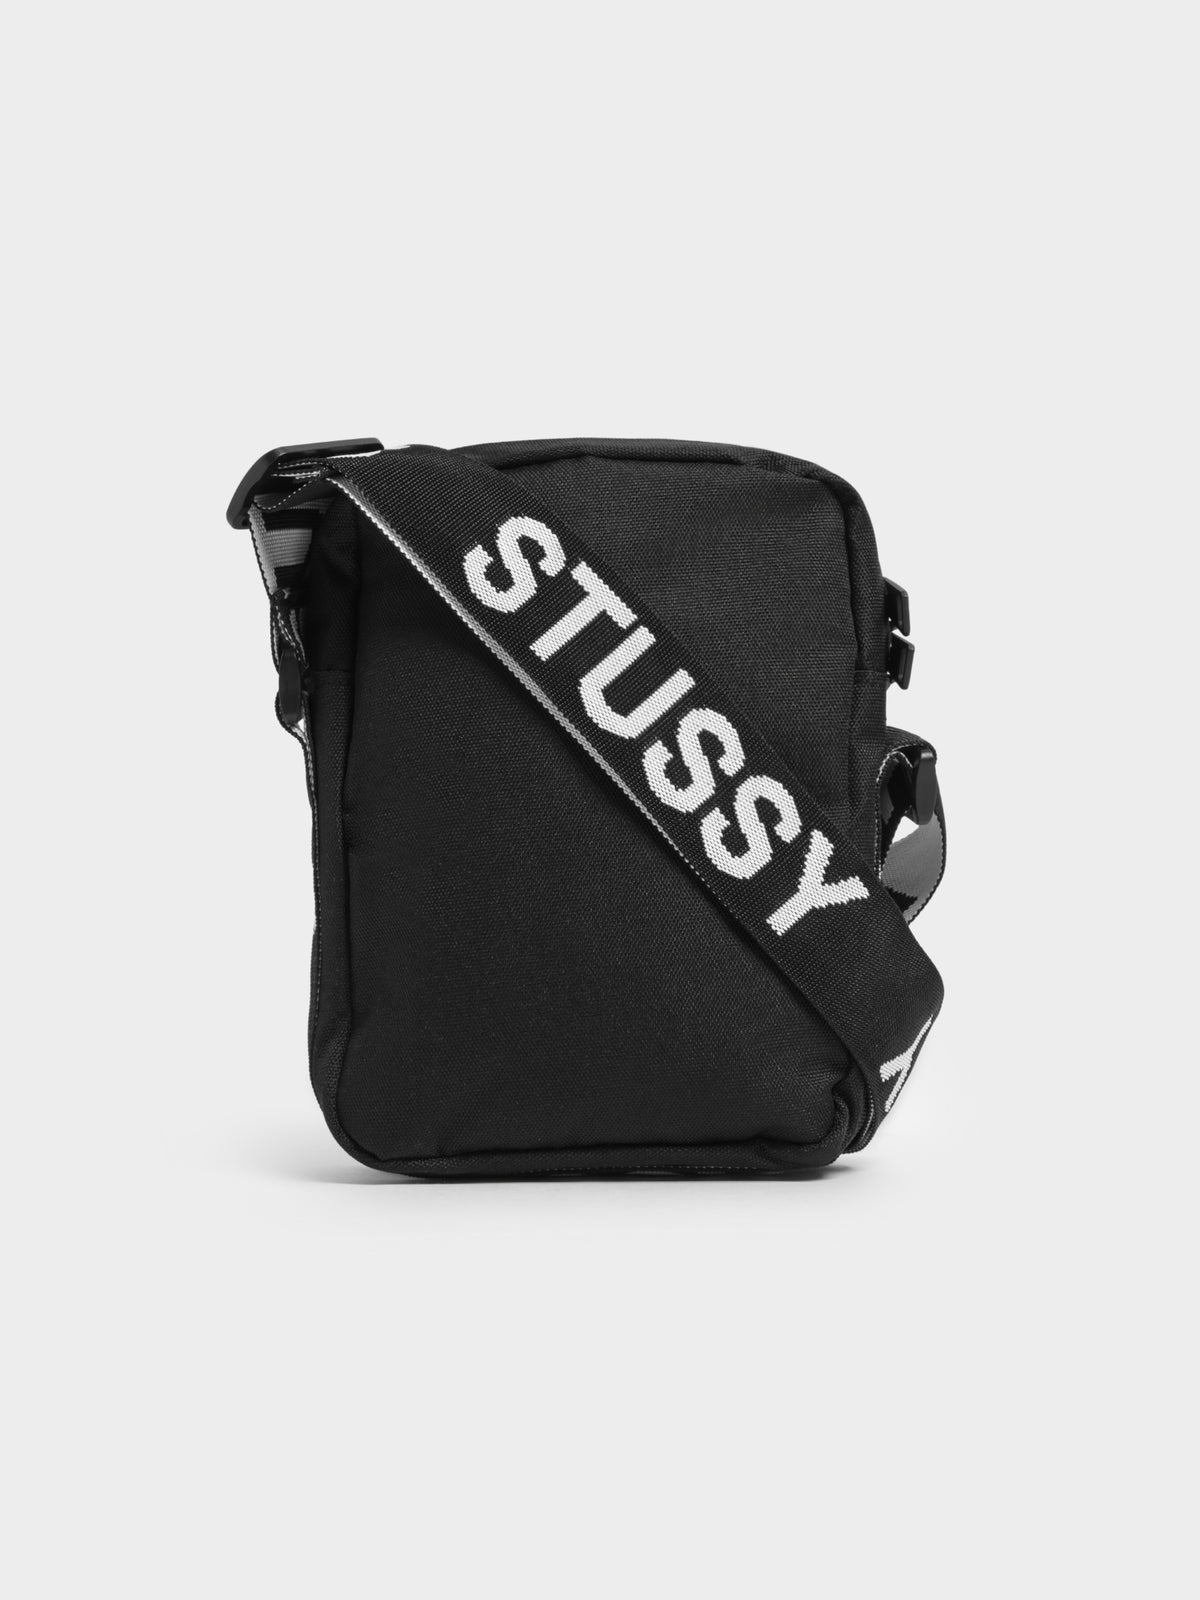 Stussy Logo Messenger Bag in Black